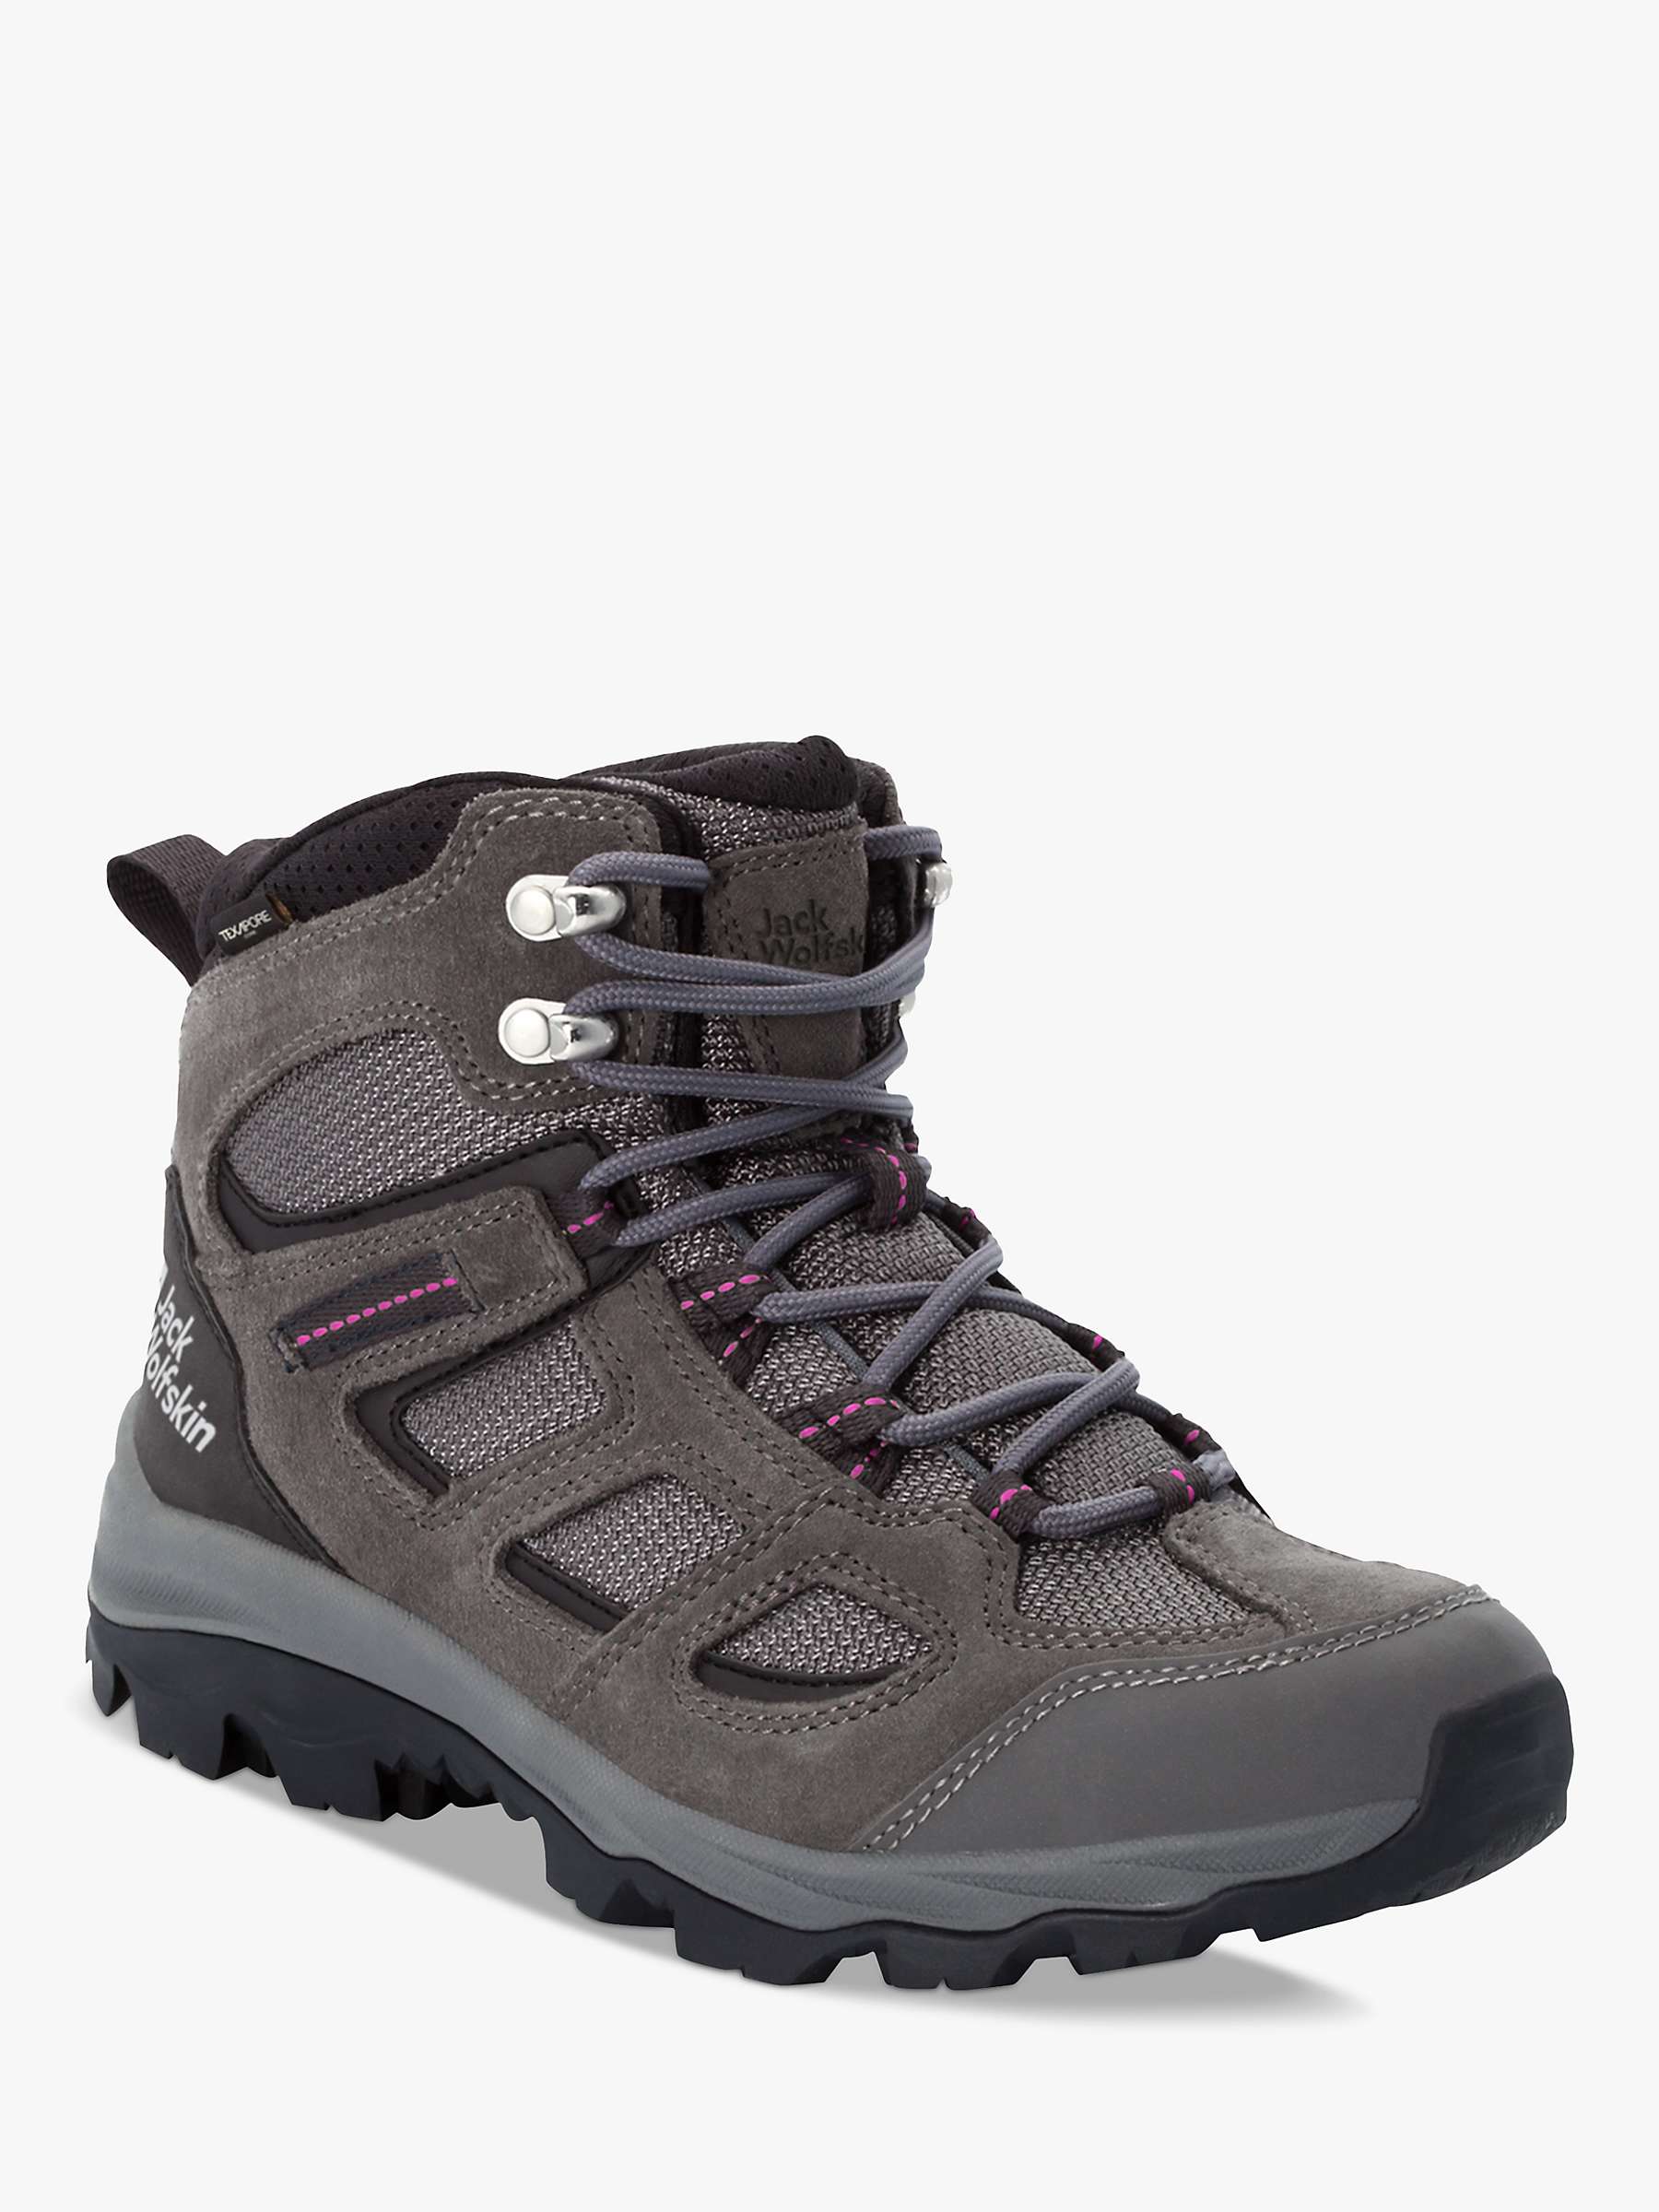 Buy Jack Wolfskin Vojo 3 Texapore Women's Waterproof Walking Boots, Tarmac Grey/Pink Online at johnlewis.com